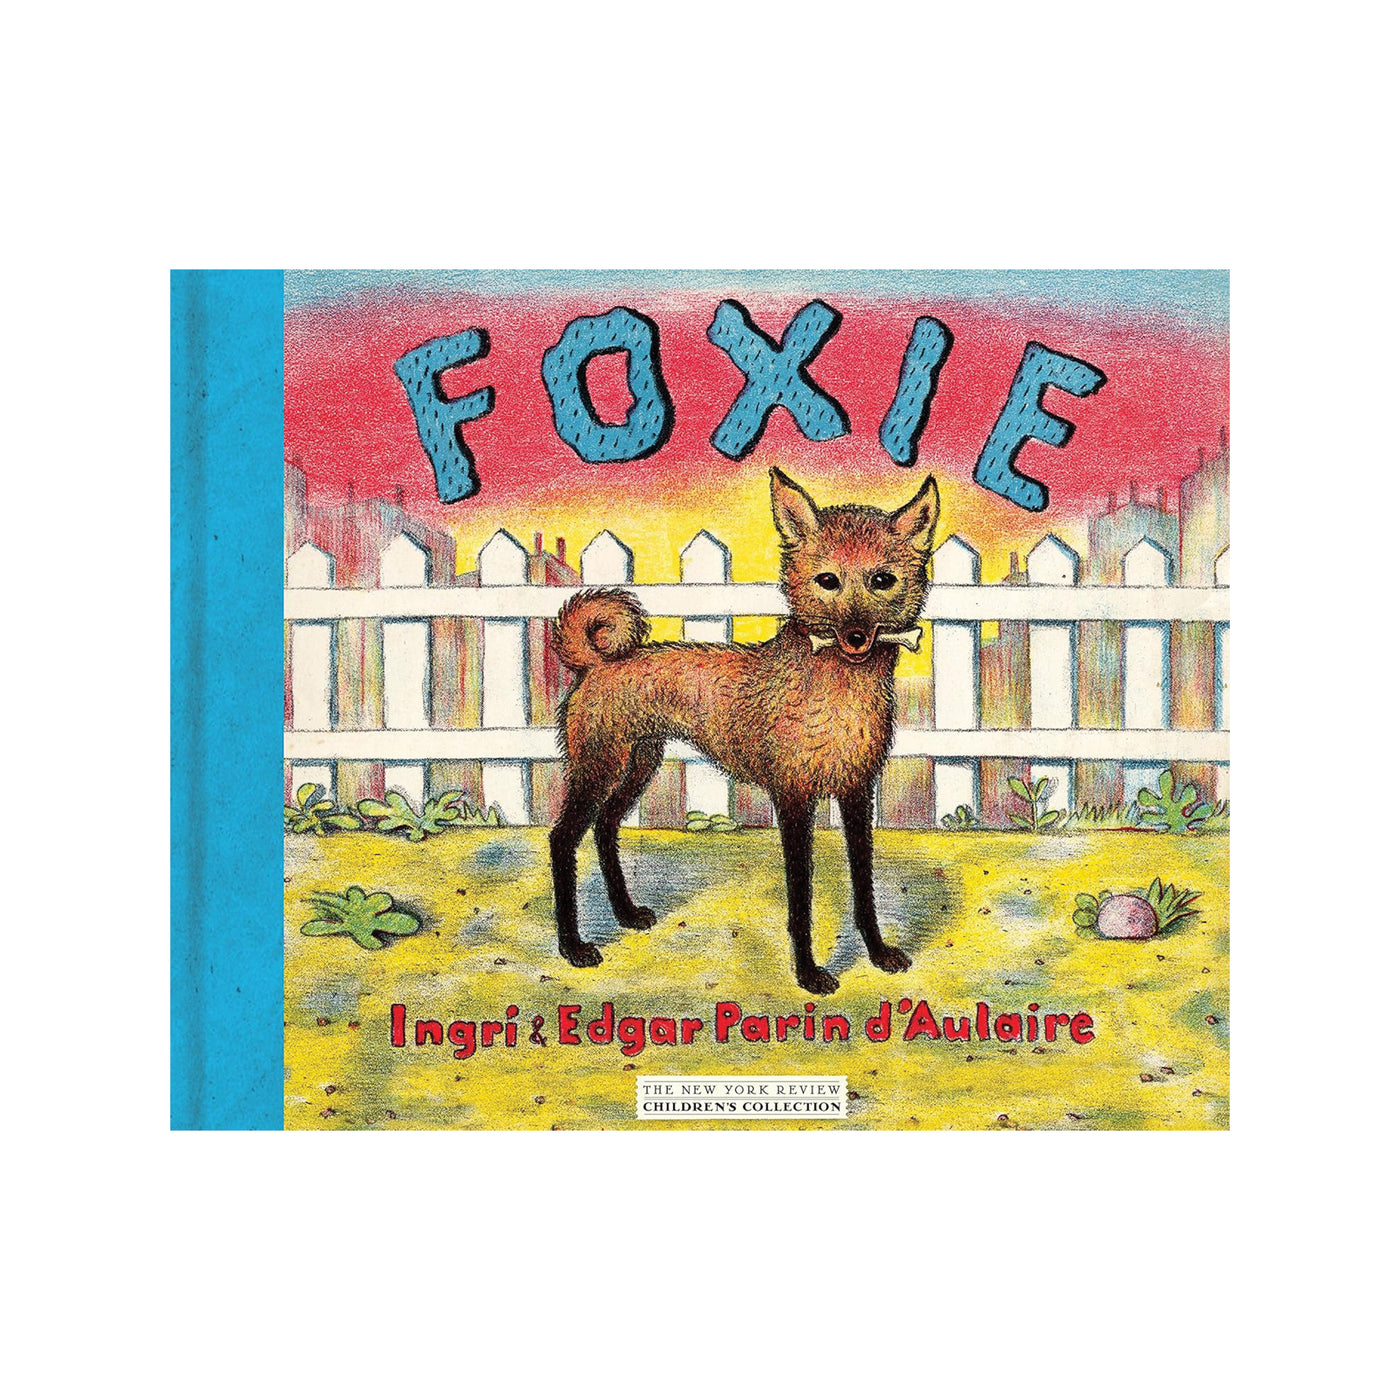 Ingri & Edgar Parin d'Aulaire | Foxie, The Singing Dog